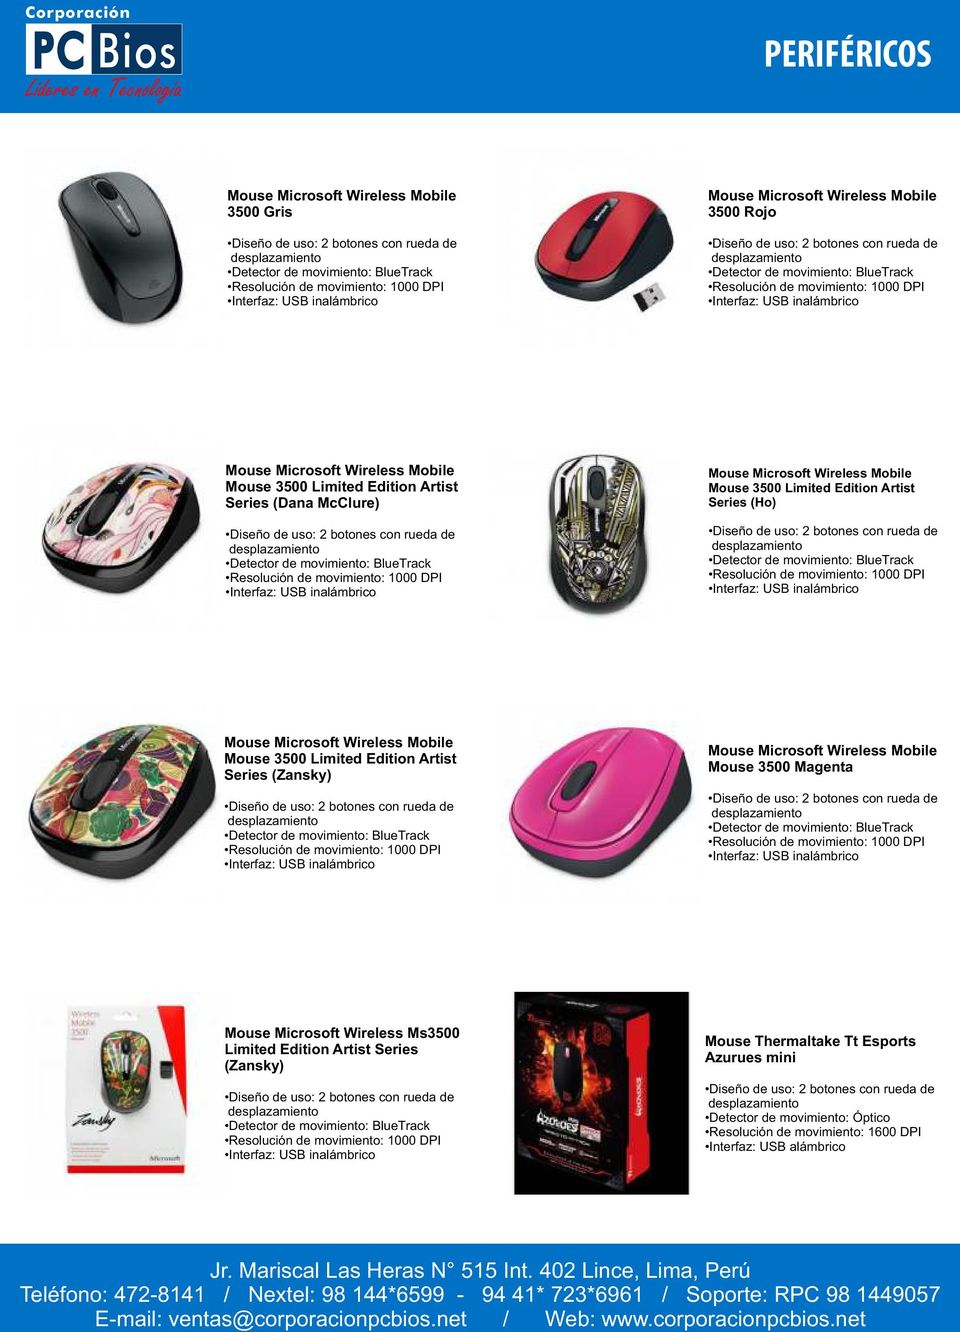 Artist Series (Zansky) Mouse 3500 Magenta Mouse Microsoft Wireless Ms3500